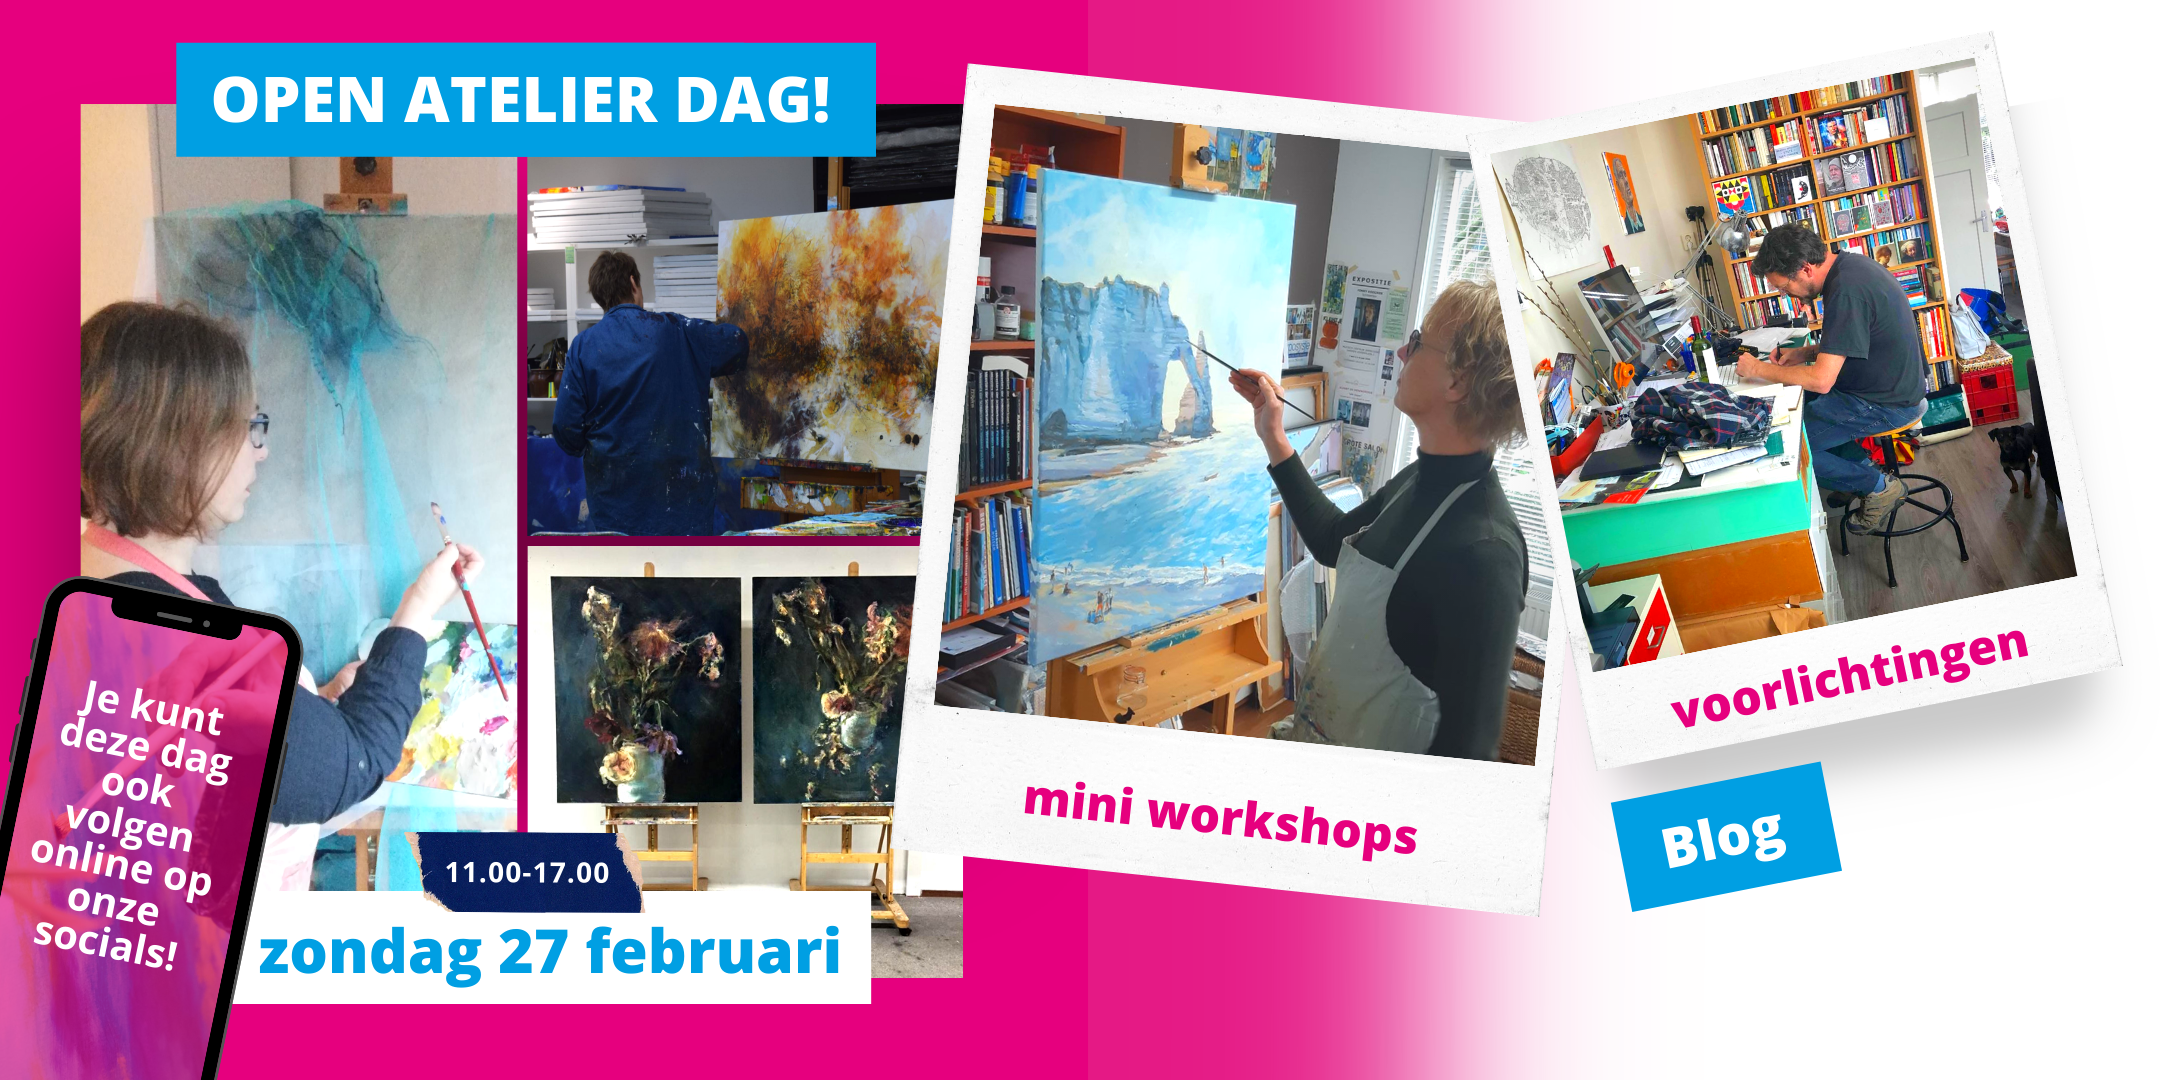 Blog; Atelier dag! Zondag 27 februari